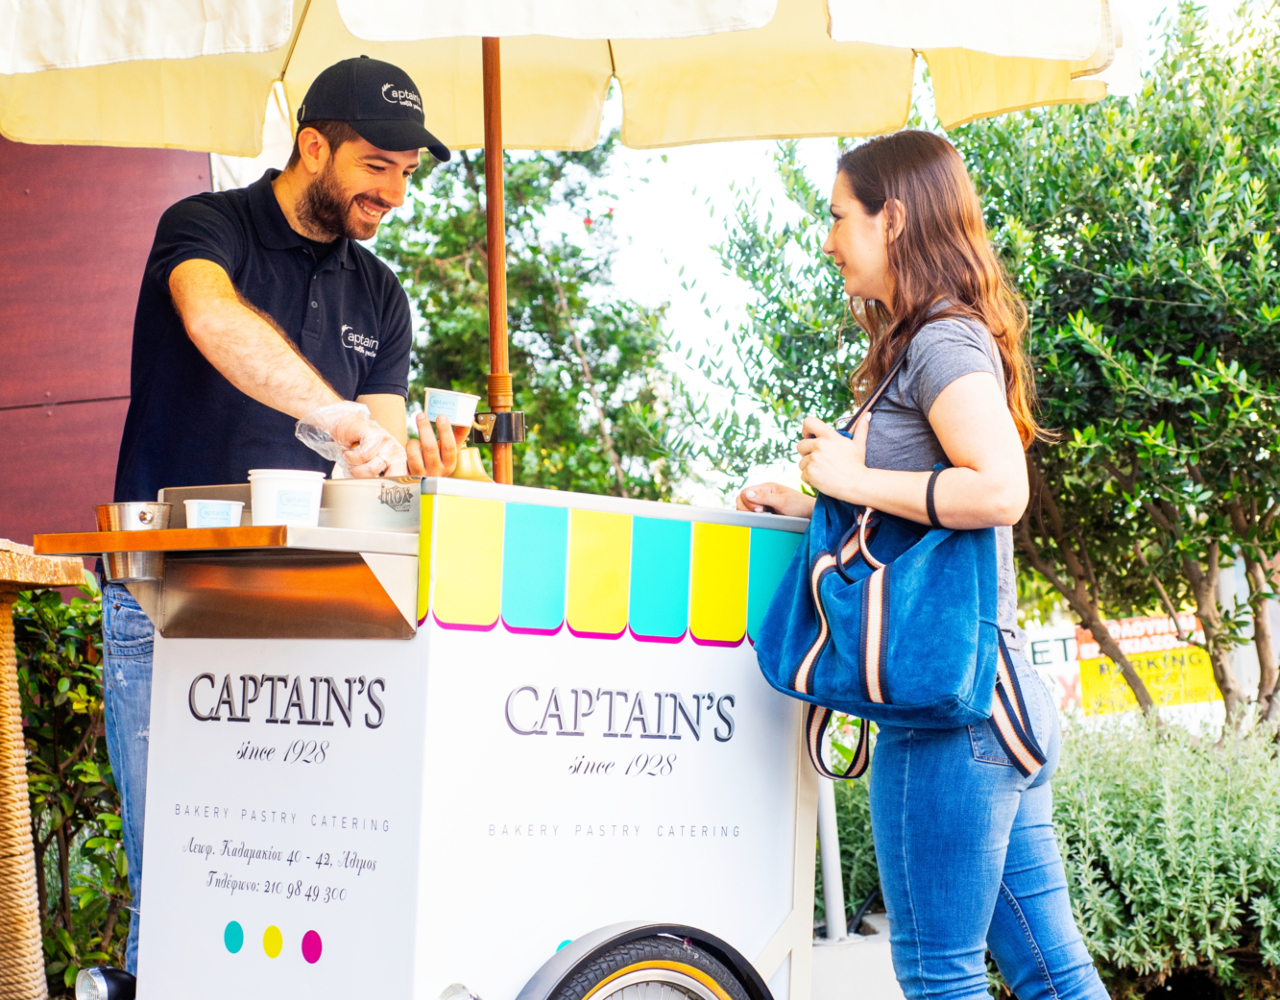 Captain’s Bakery, οι νέες γεύσεις παγωτού του ιστορικού φούρνου